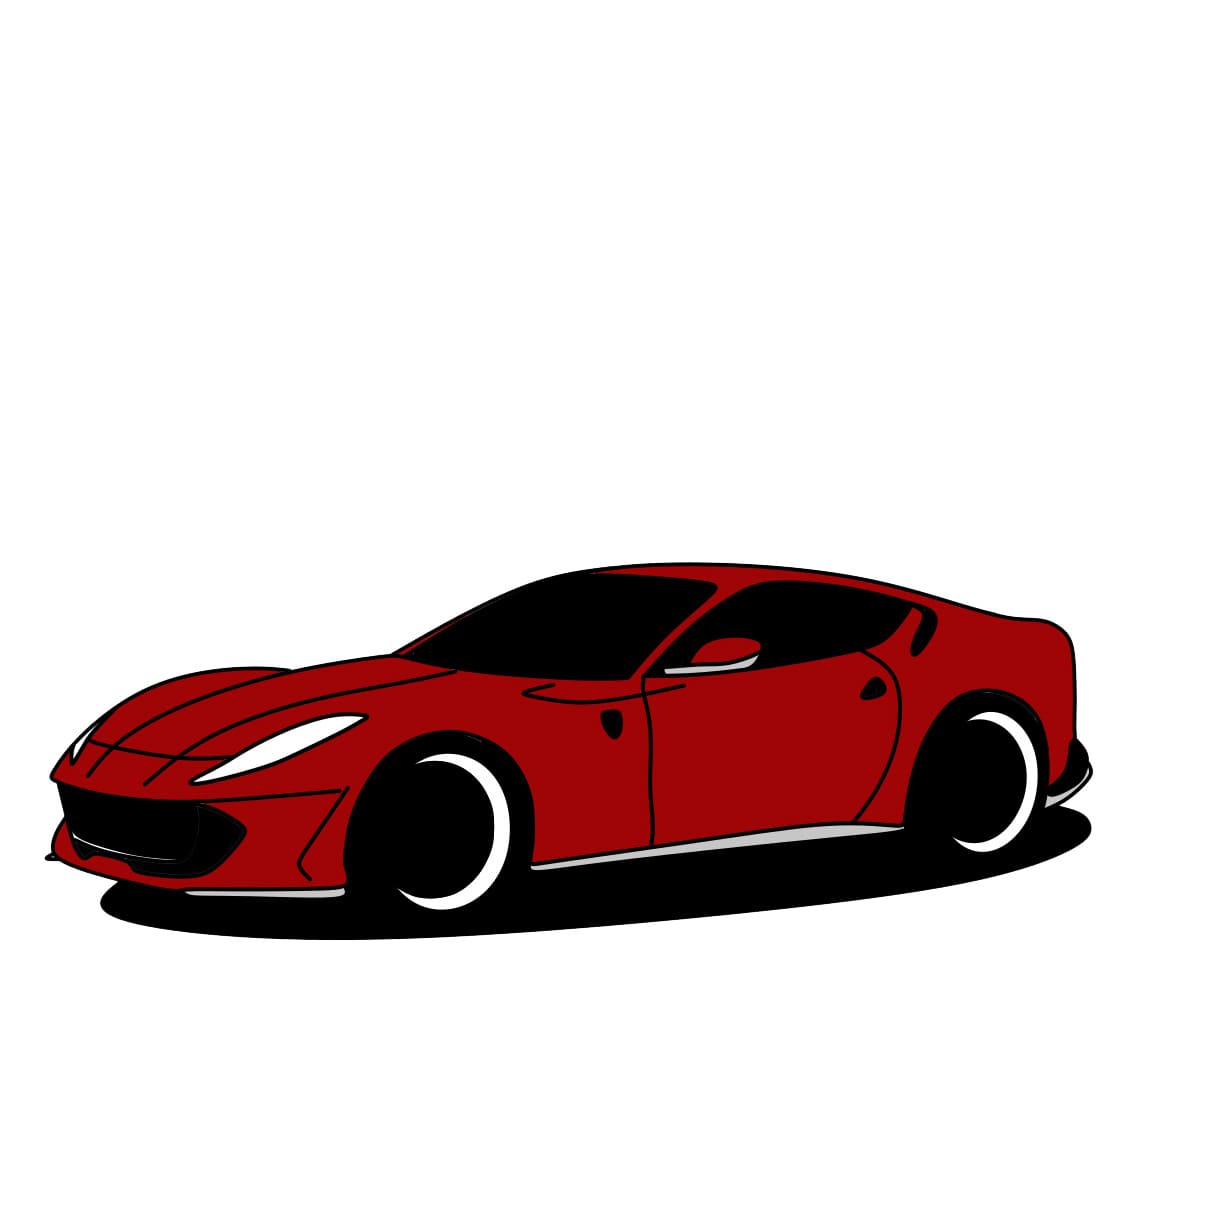 Cach-ve-xe-Ferrari-Buoc-3-6